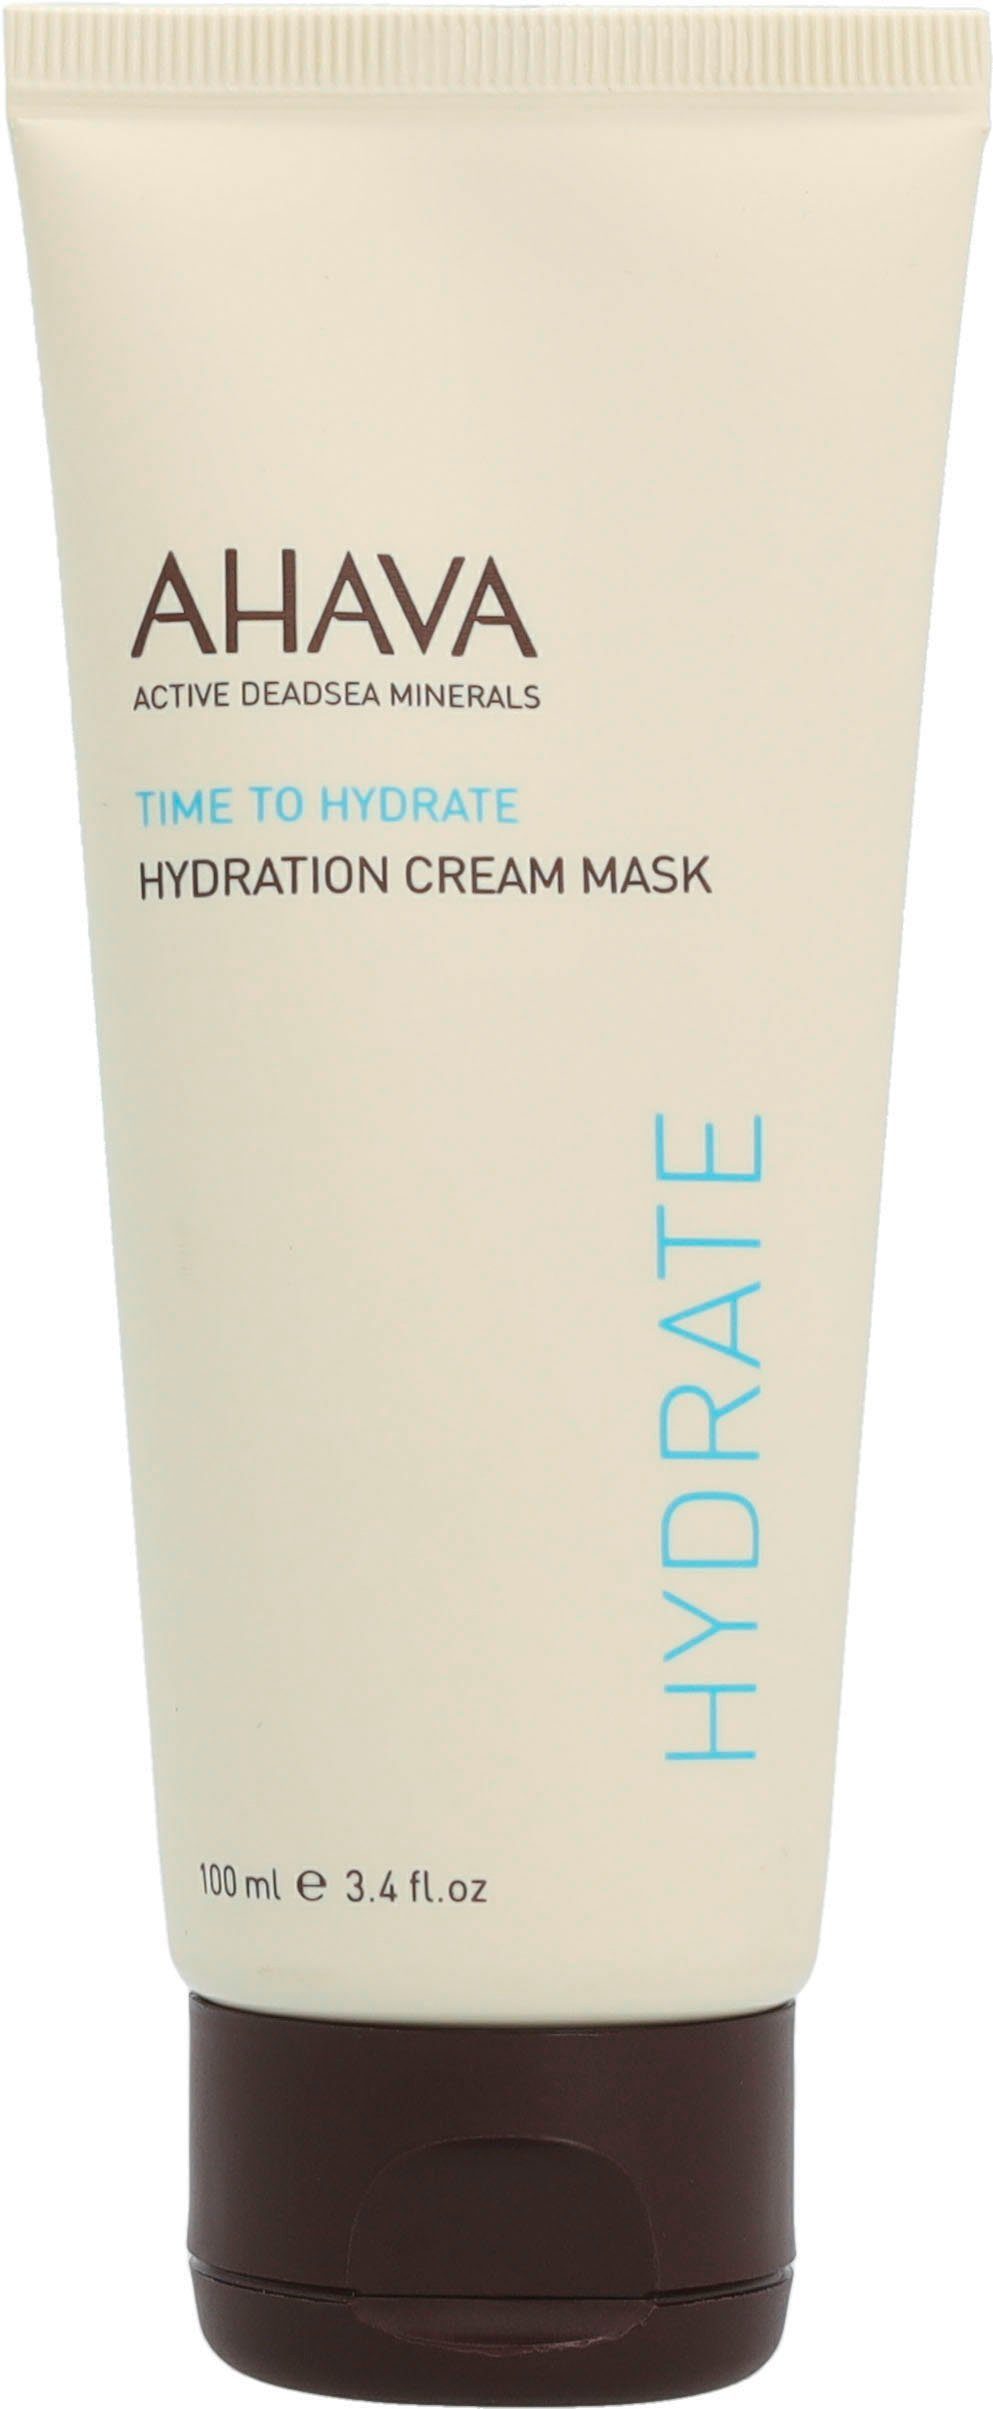 AHAVA Gesichtsmaske Hydration Cream Mask Hydrate Time To